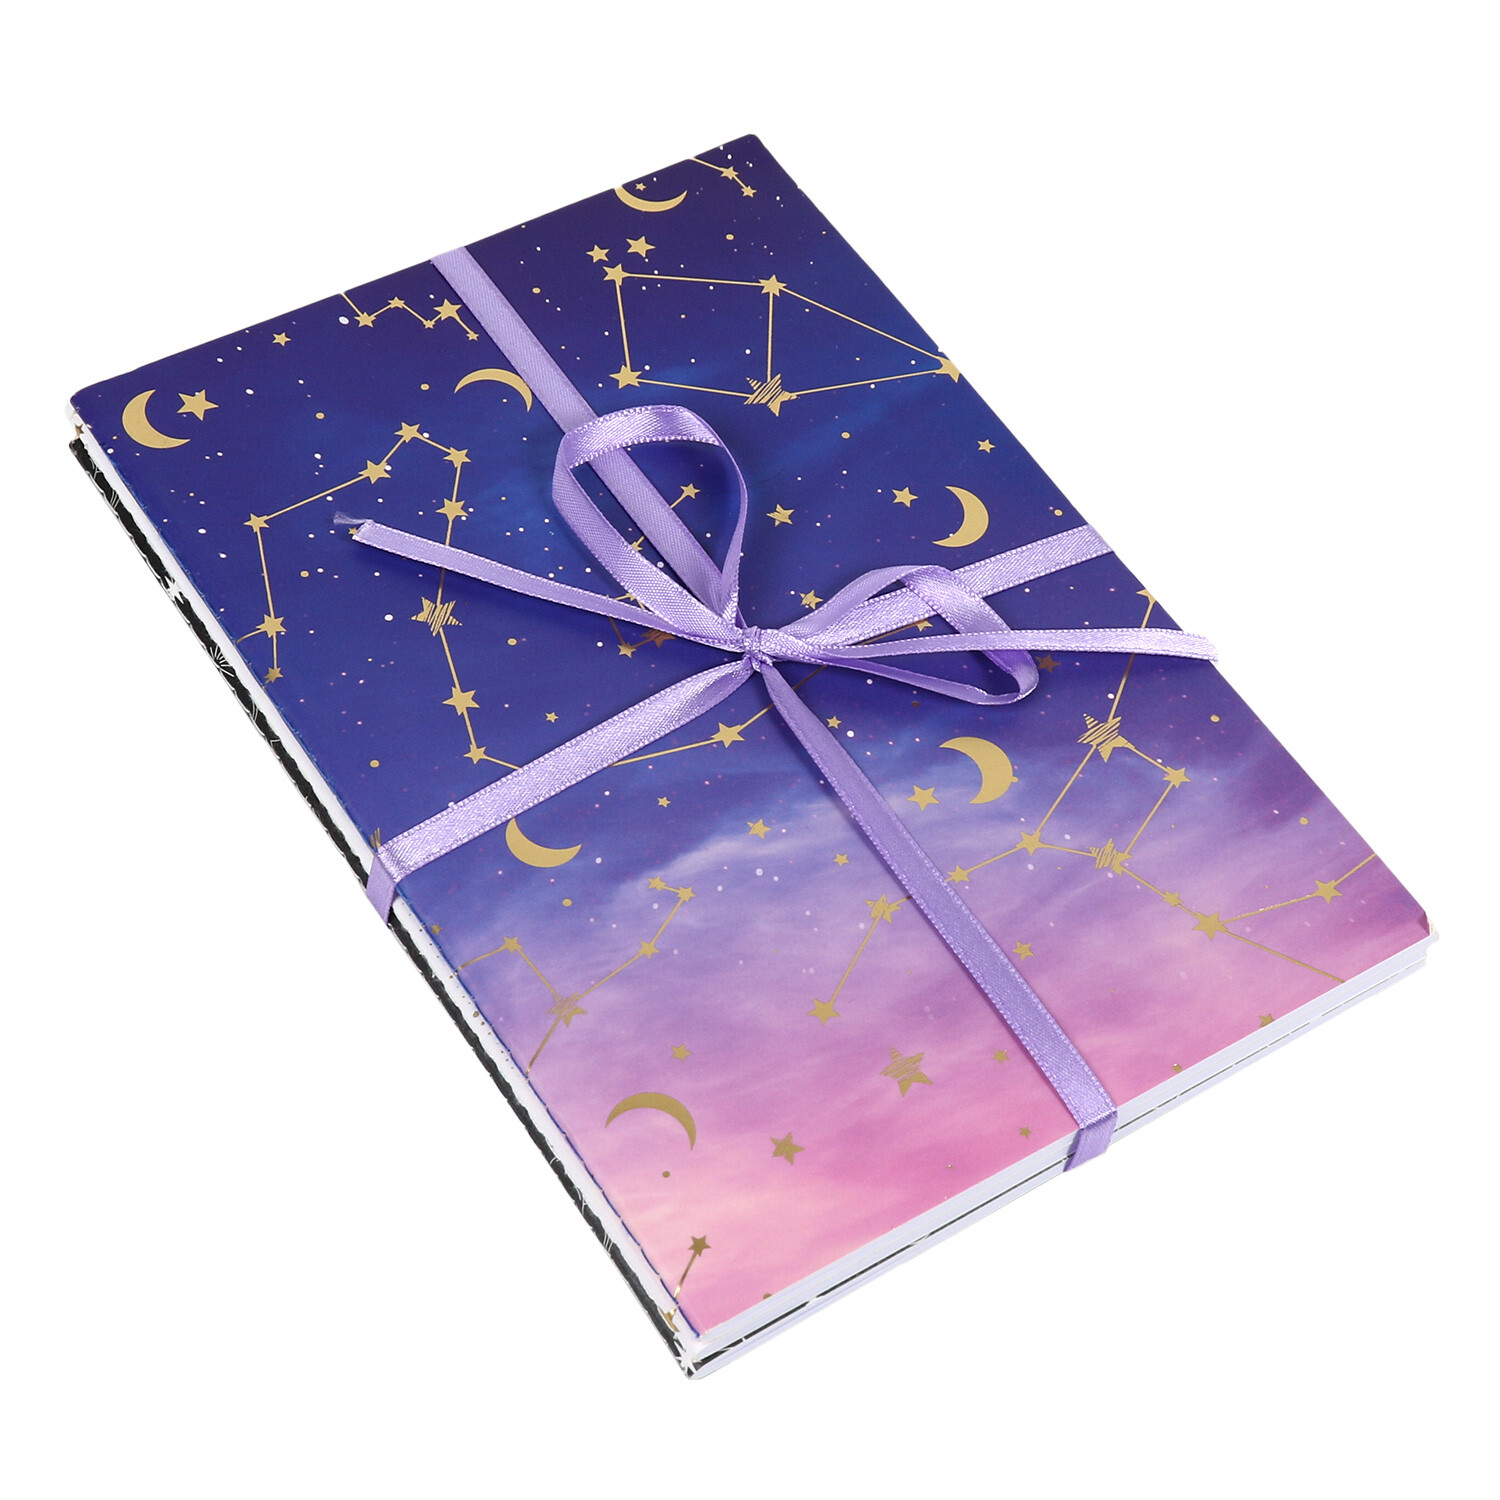 Stargazer Notebook 3 Pack Image 1